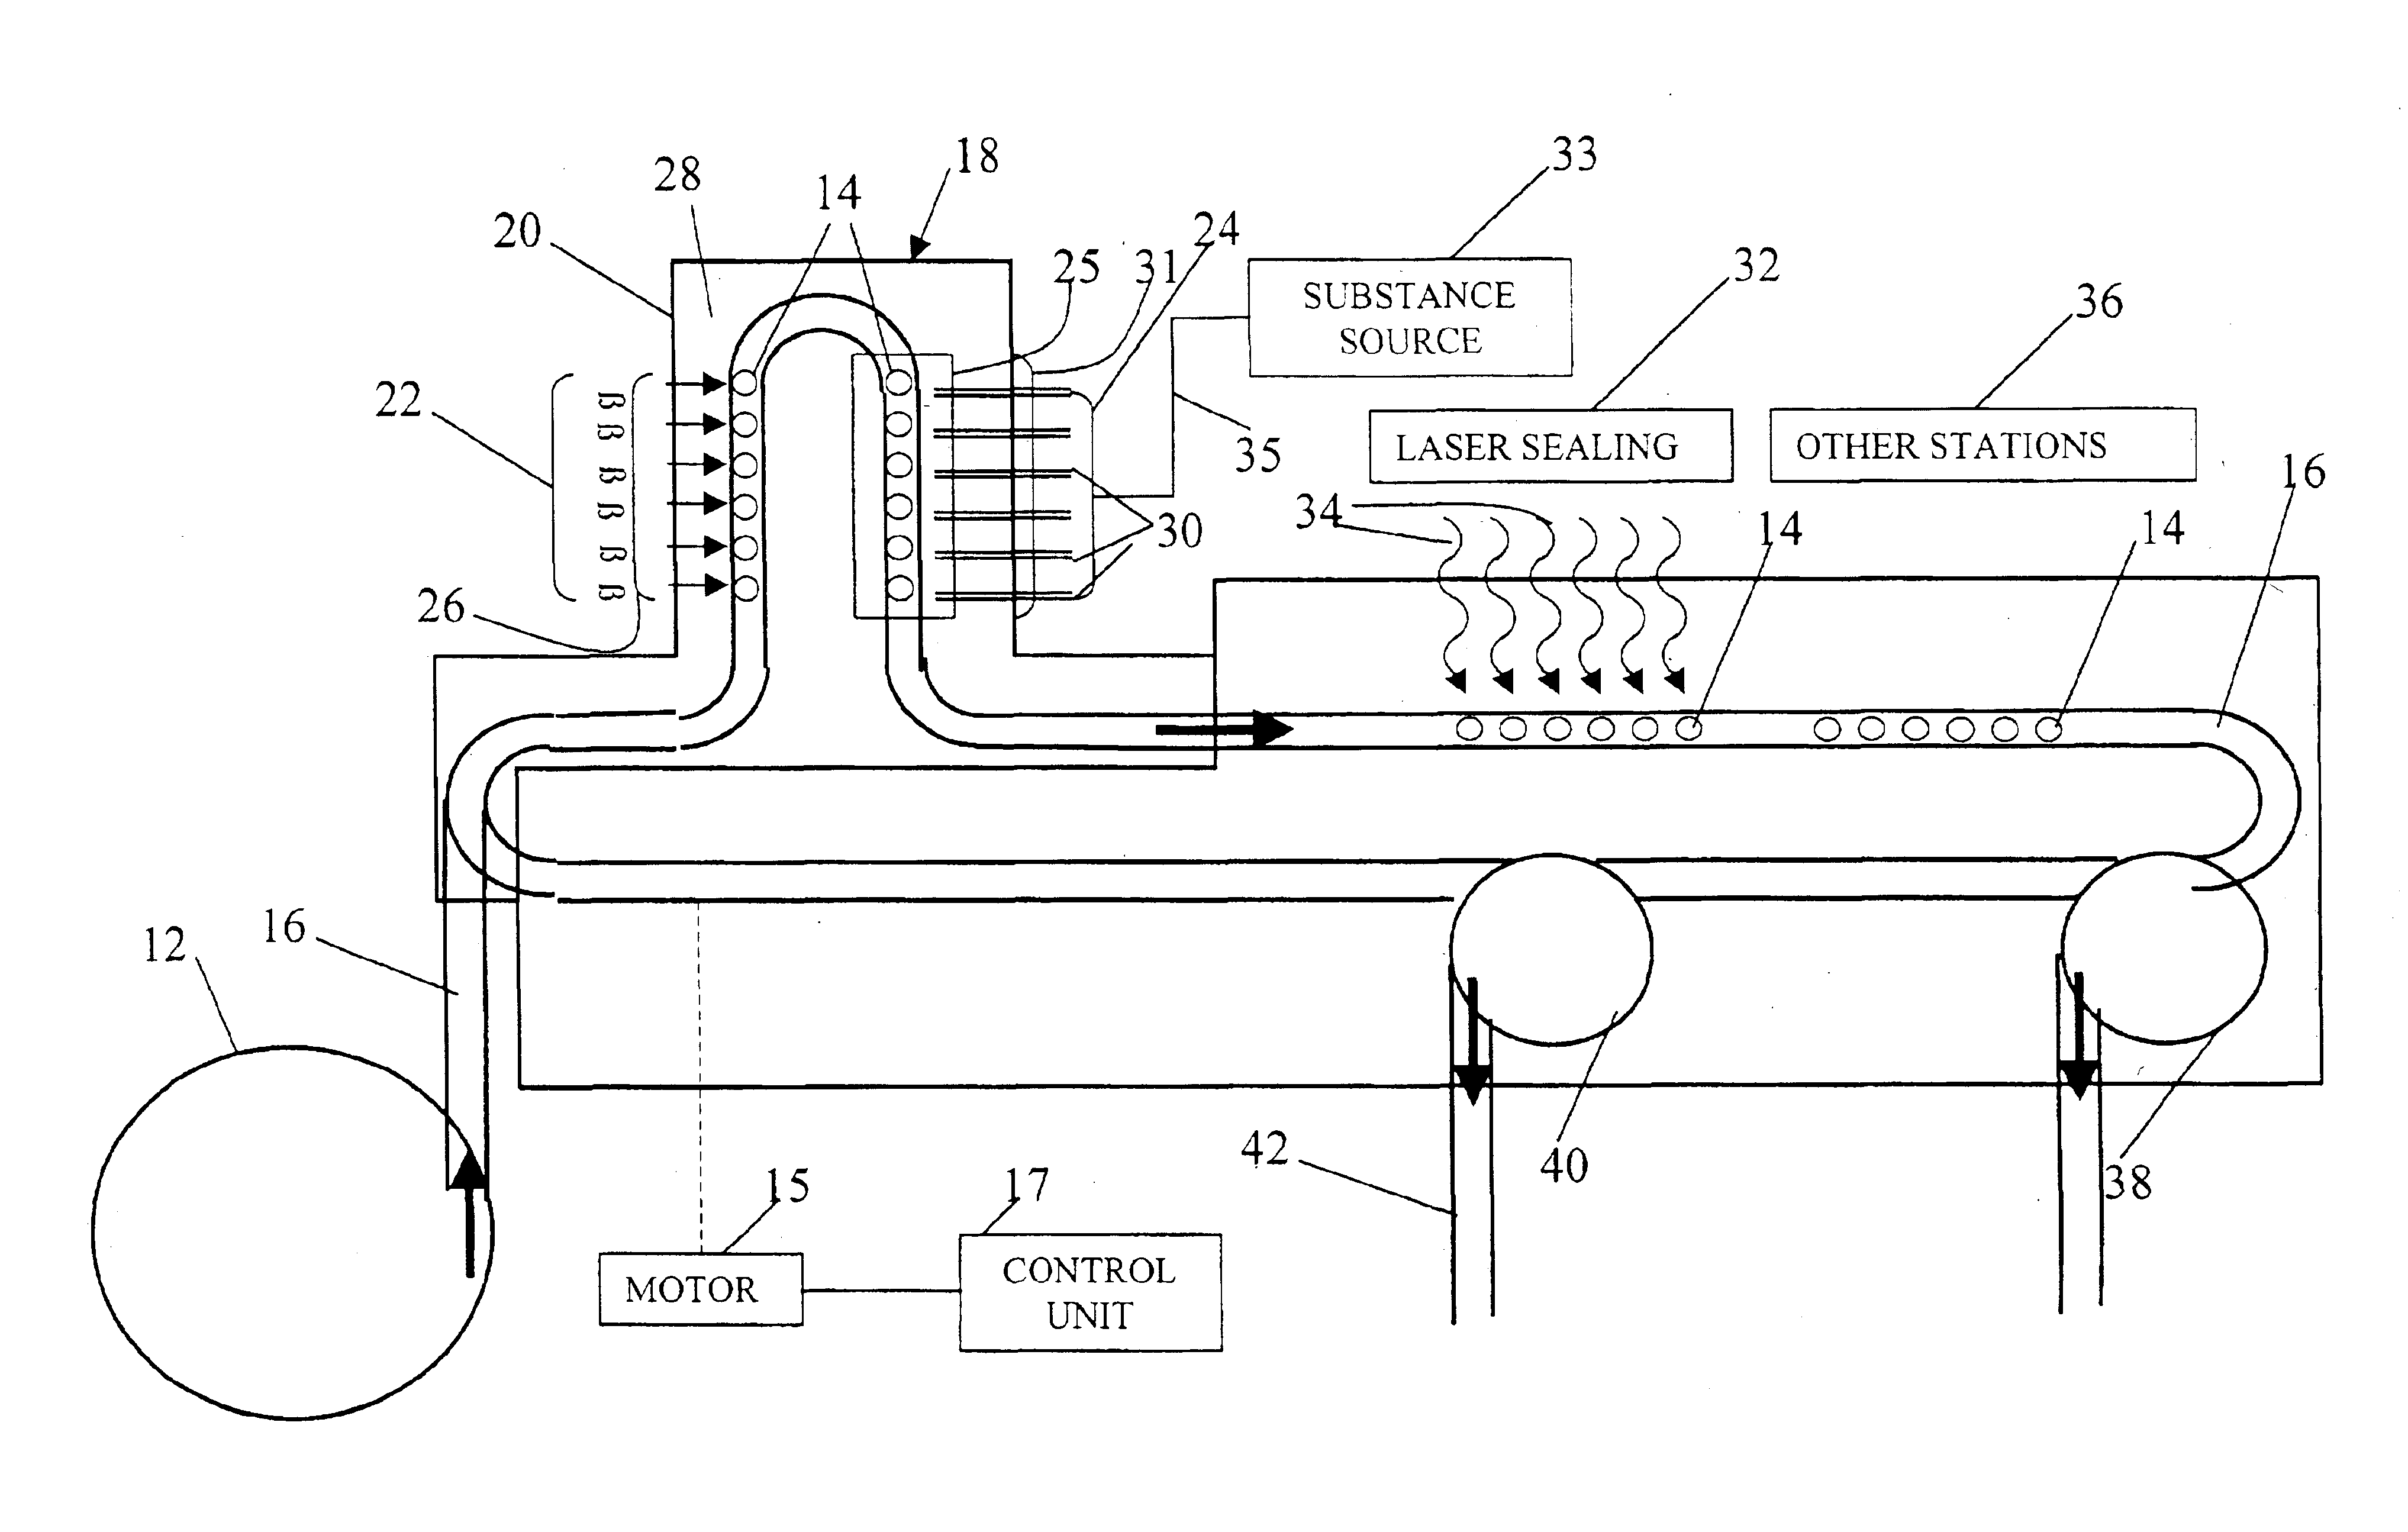 Sterile filling machine having needle filling station within e-beam chamber